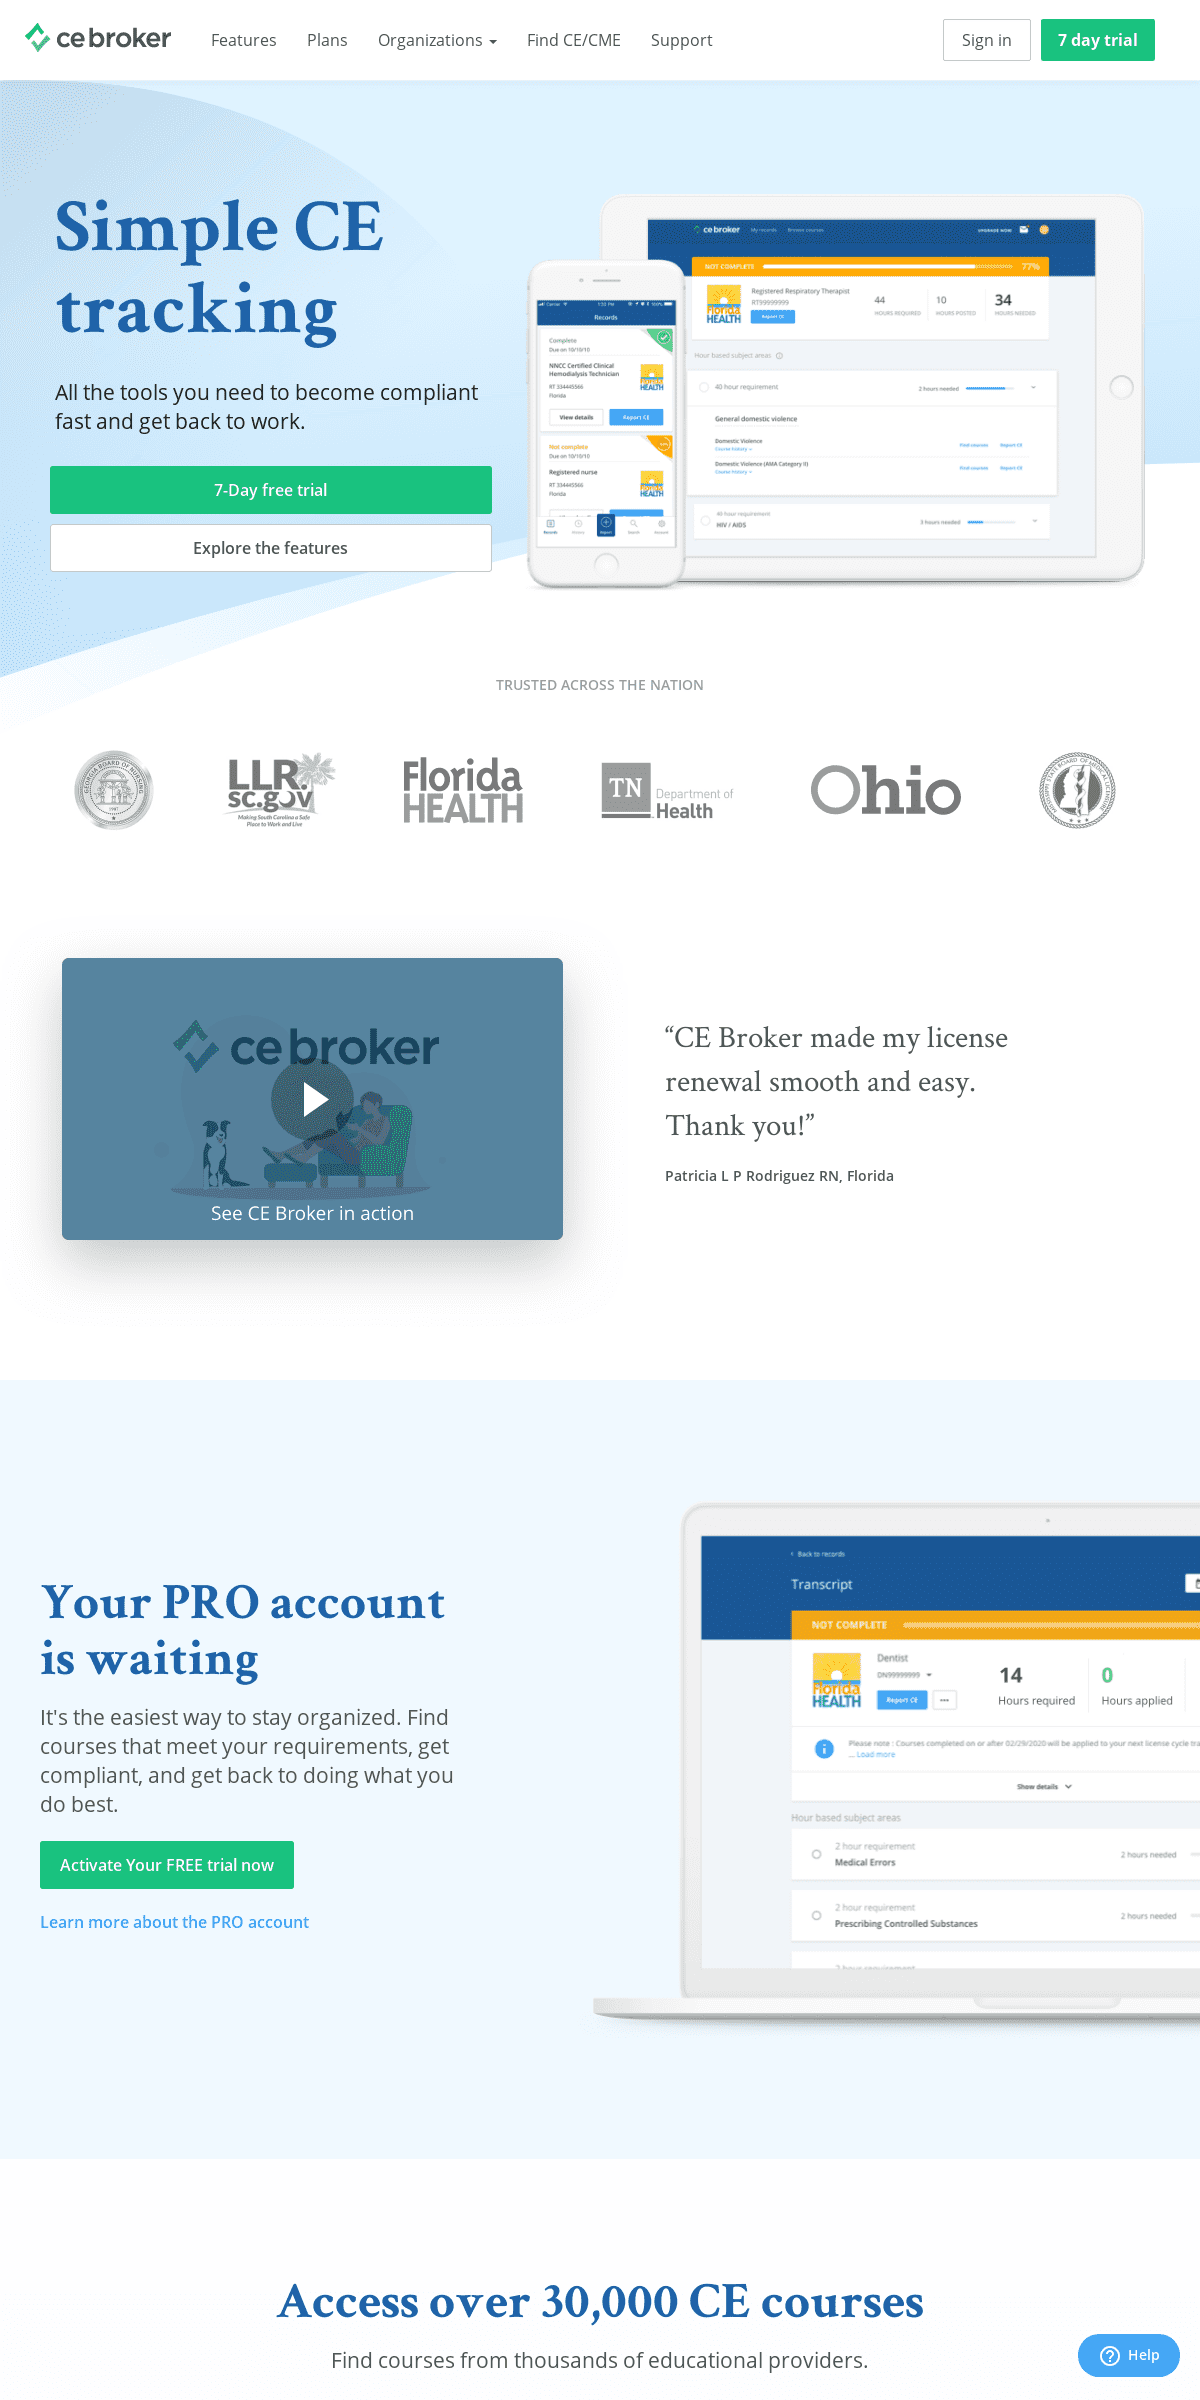 A complete backup of cebroker.com